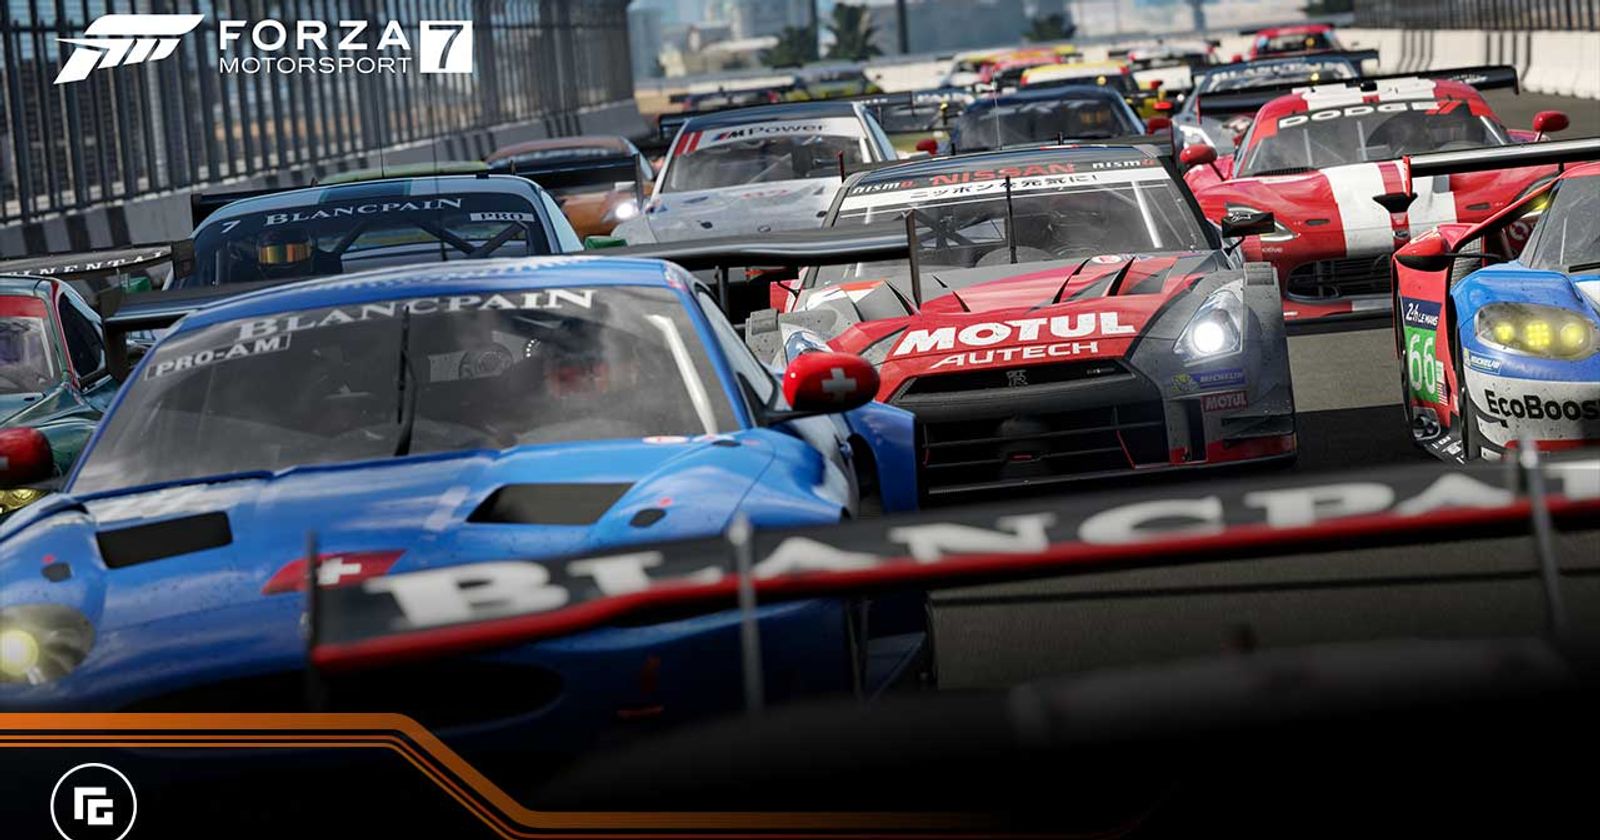 Forza Motorsport 4 gets Top Gear Car DLC